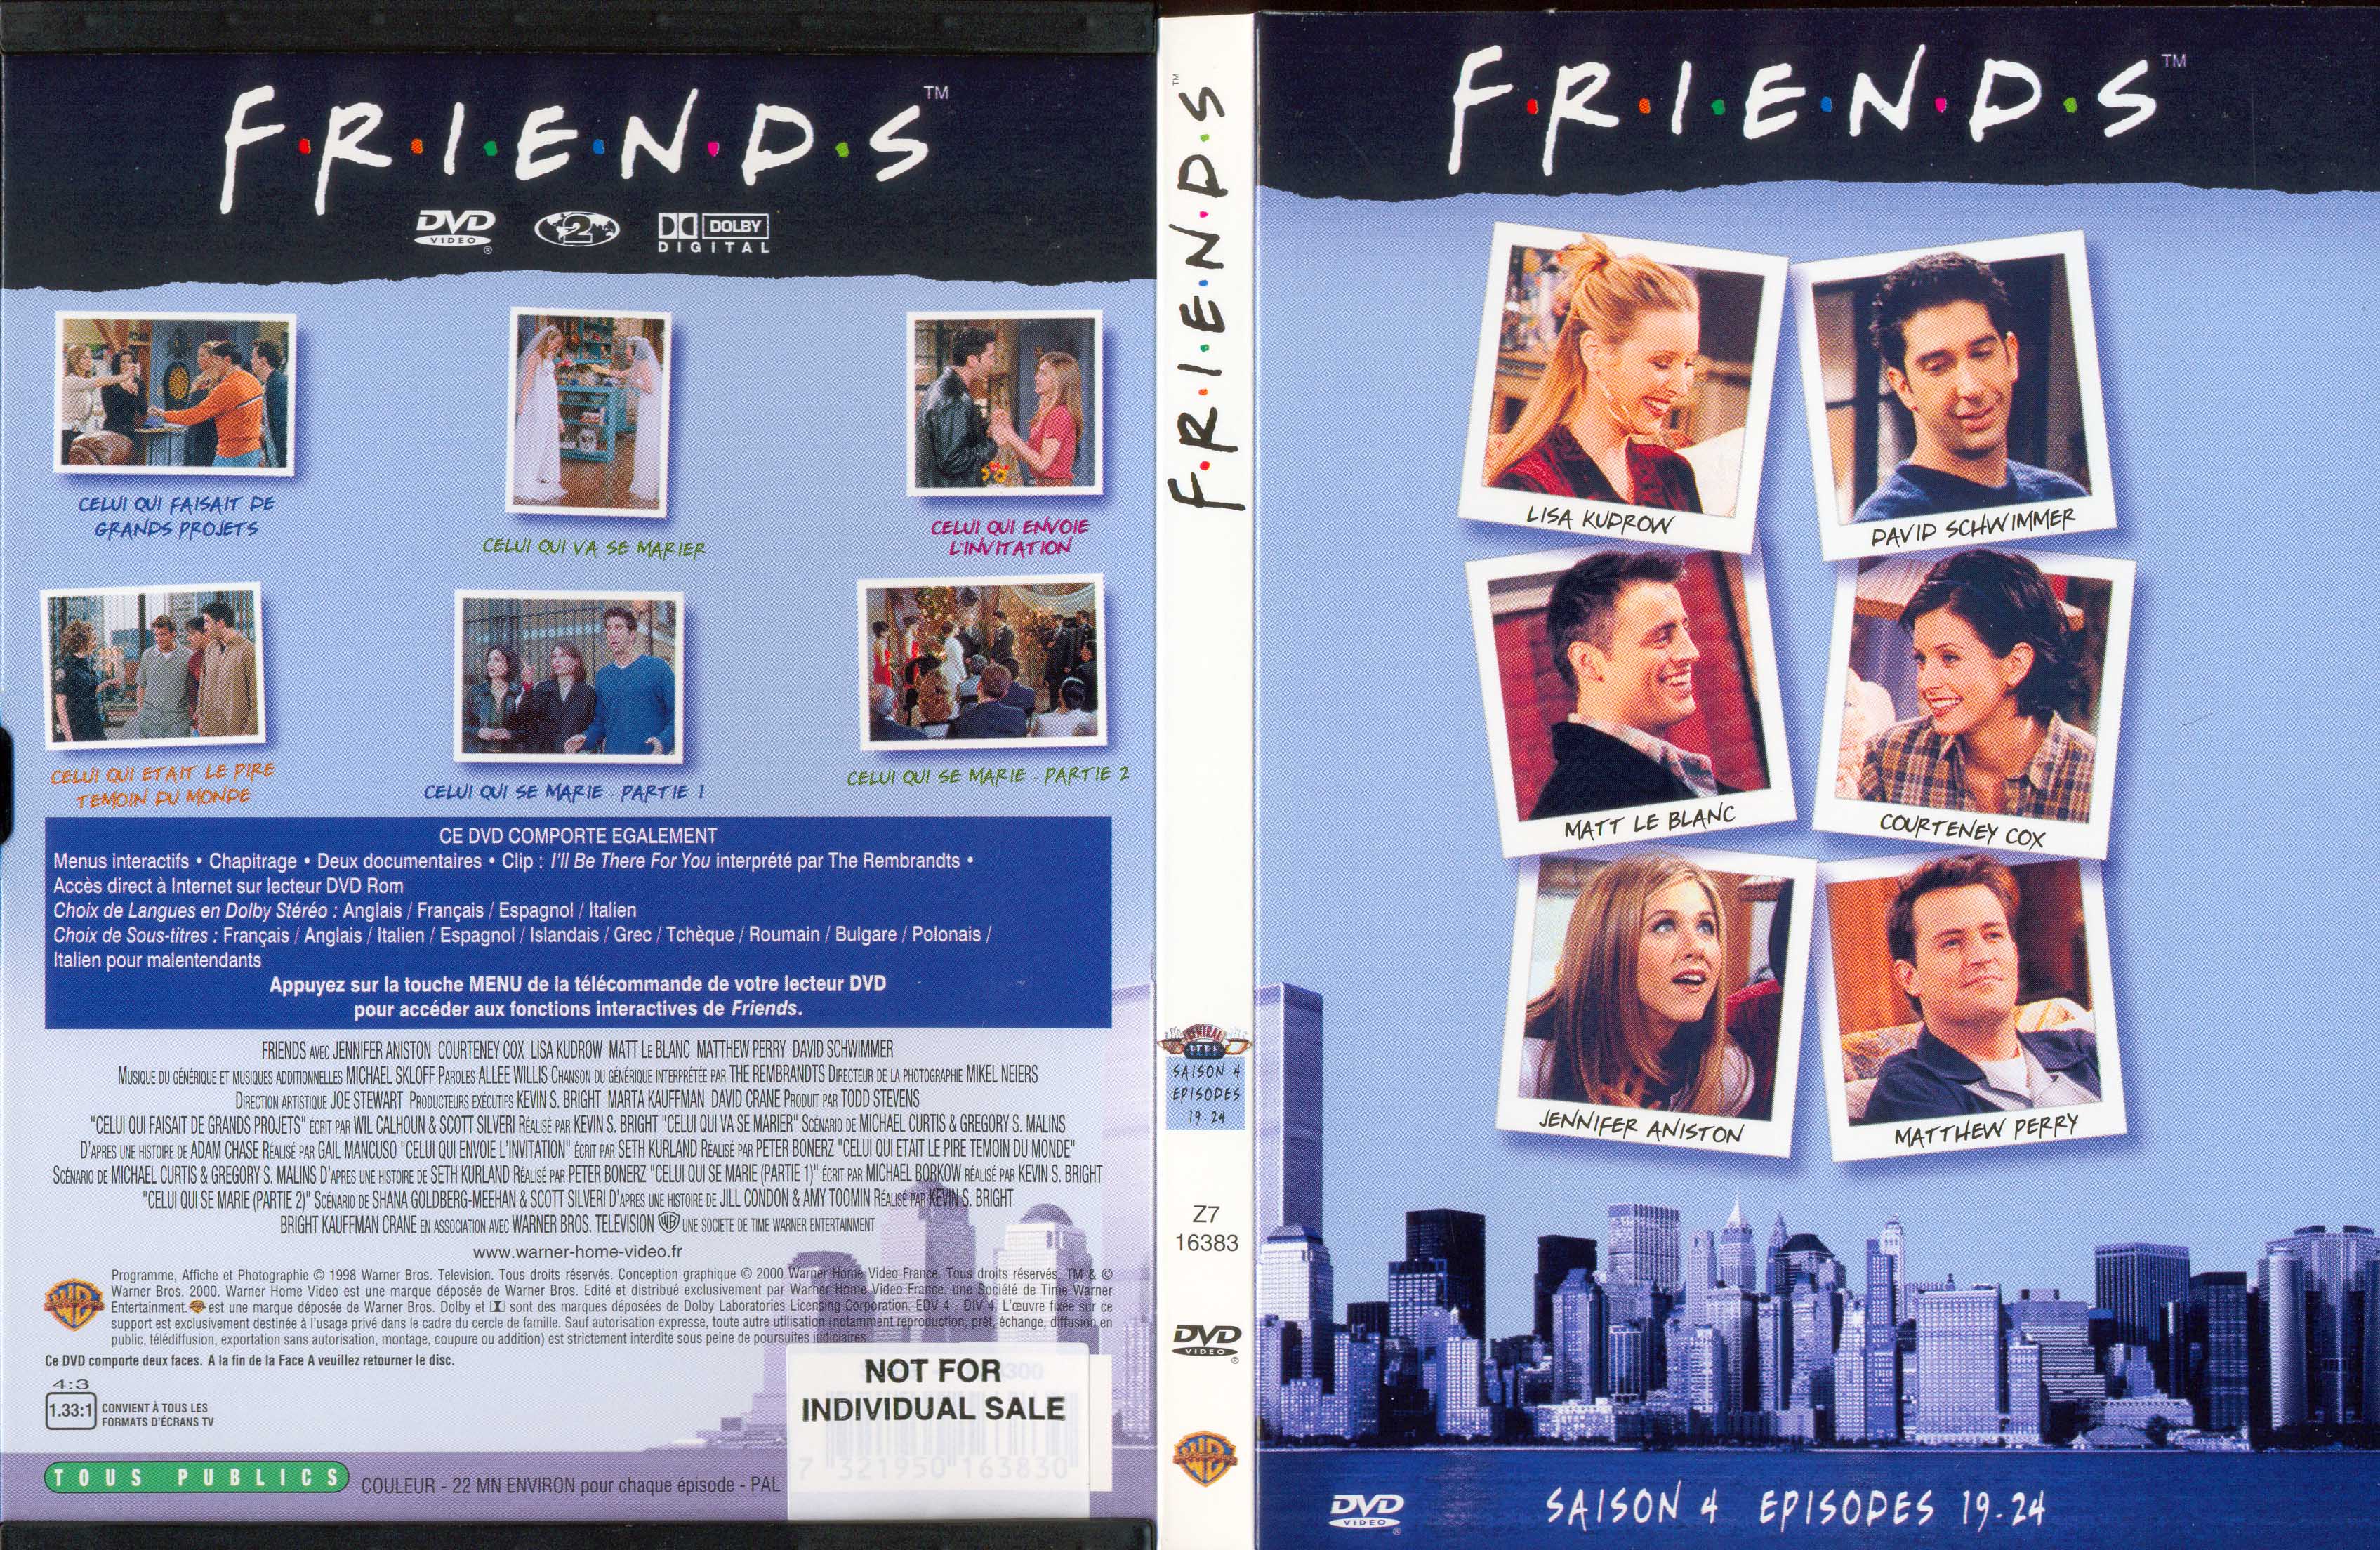 Jaquette DVD Friends saison 4 dvd 3